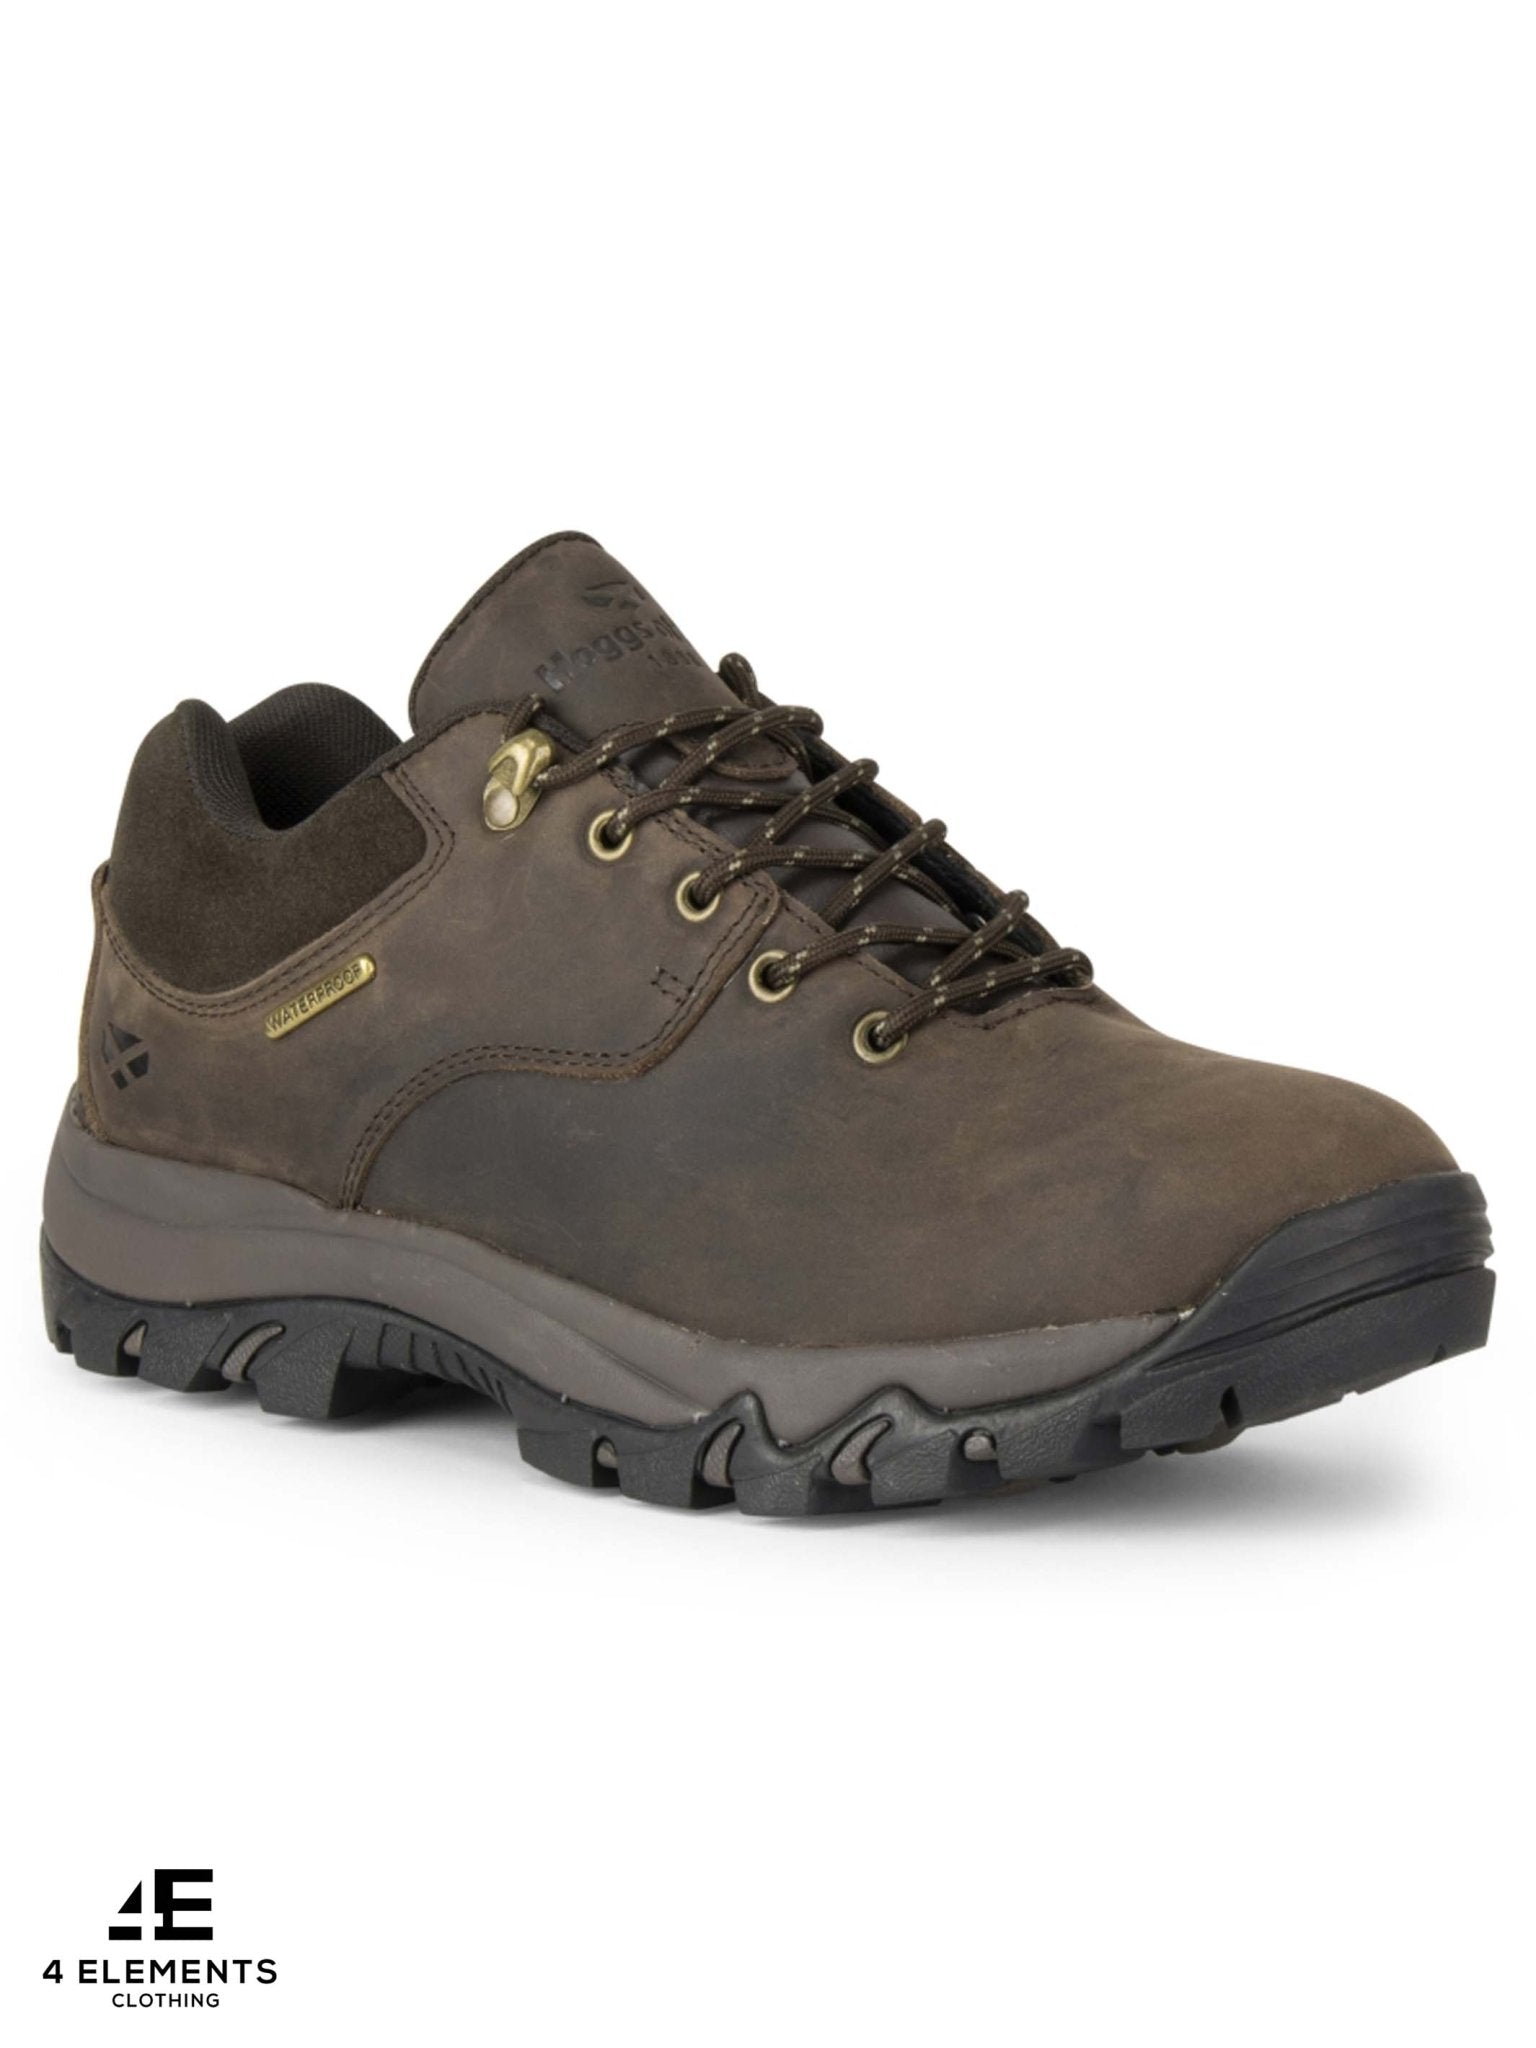 Hoggs of Fife Hoggs of Fife - Waterproof walking shoe / Breathable hiking shoe Torridon Leather Trek and trail Shoe Shoes